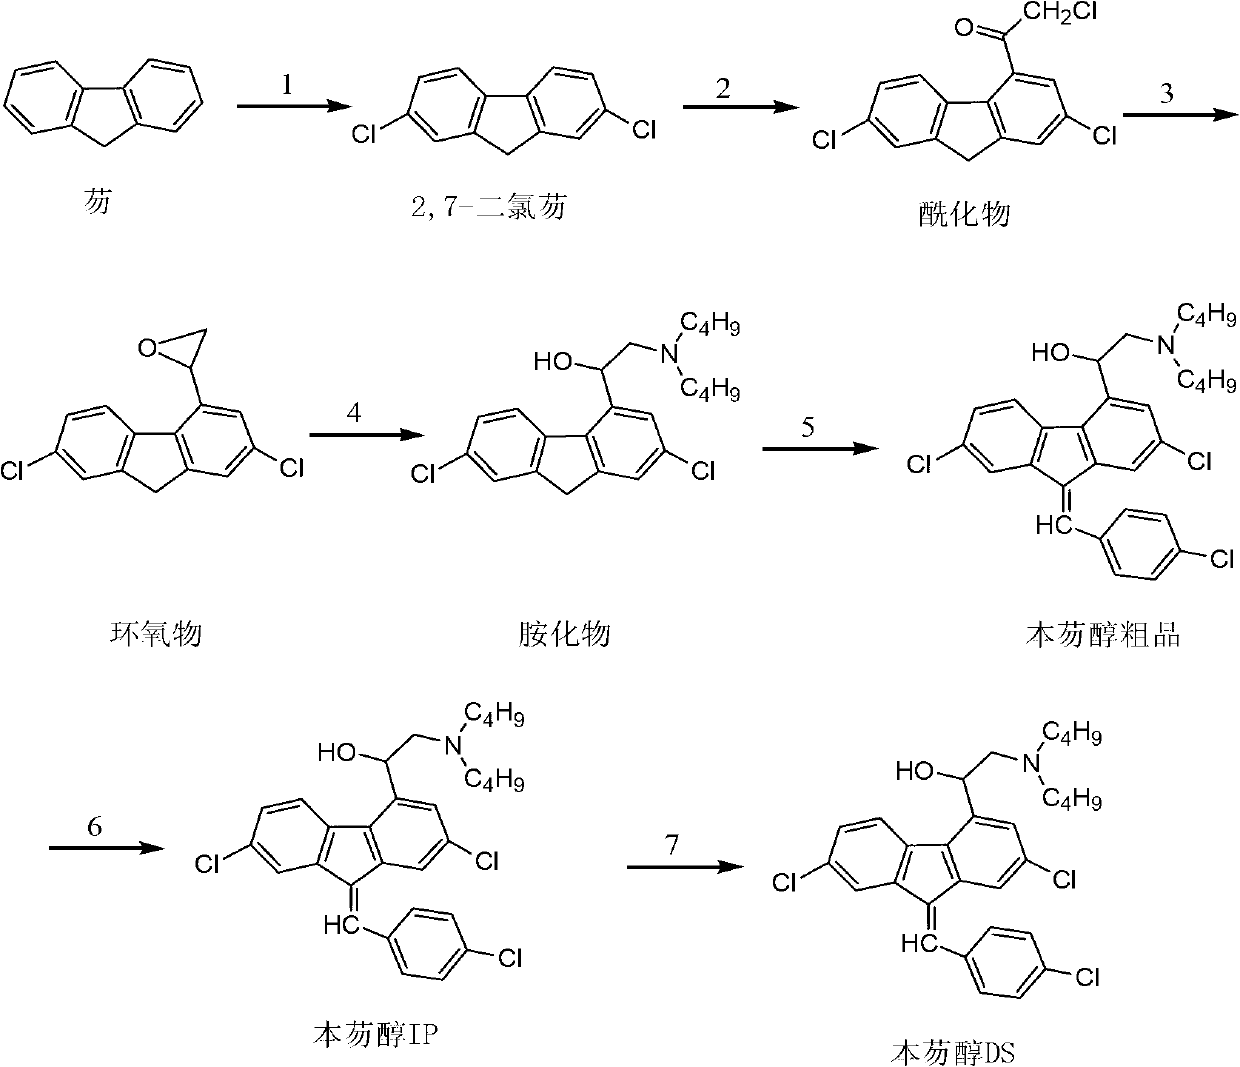 Preparation method for 2-dibutylamido-1-1(2,7- dichloro-9H-fluorine-4base)-ethanol